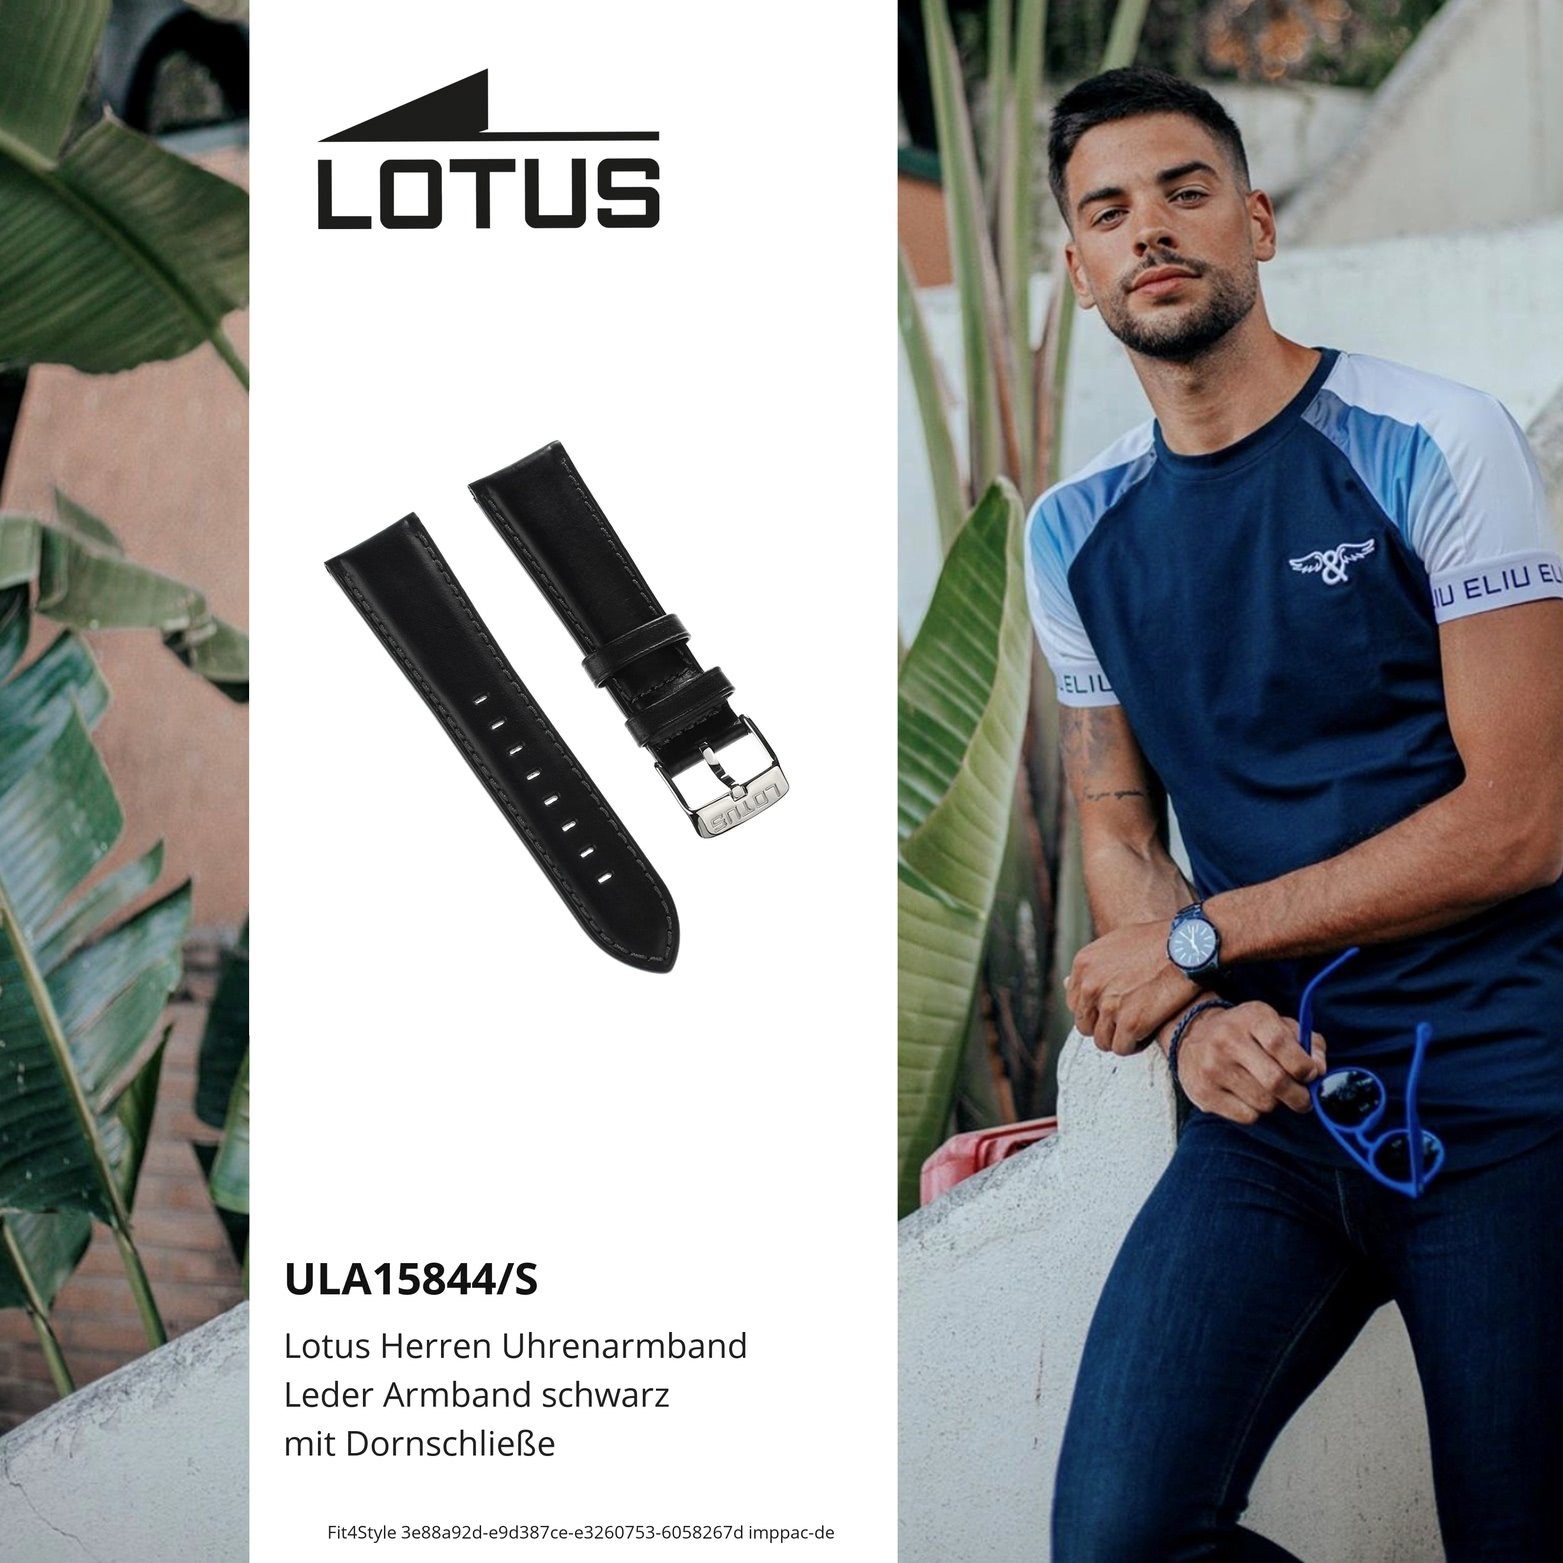 Lotus Uhrenarmband Lotus Herren Uhrenarmband Lederarmband, Herrenuhr mit Sport-Style 24mm